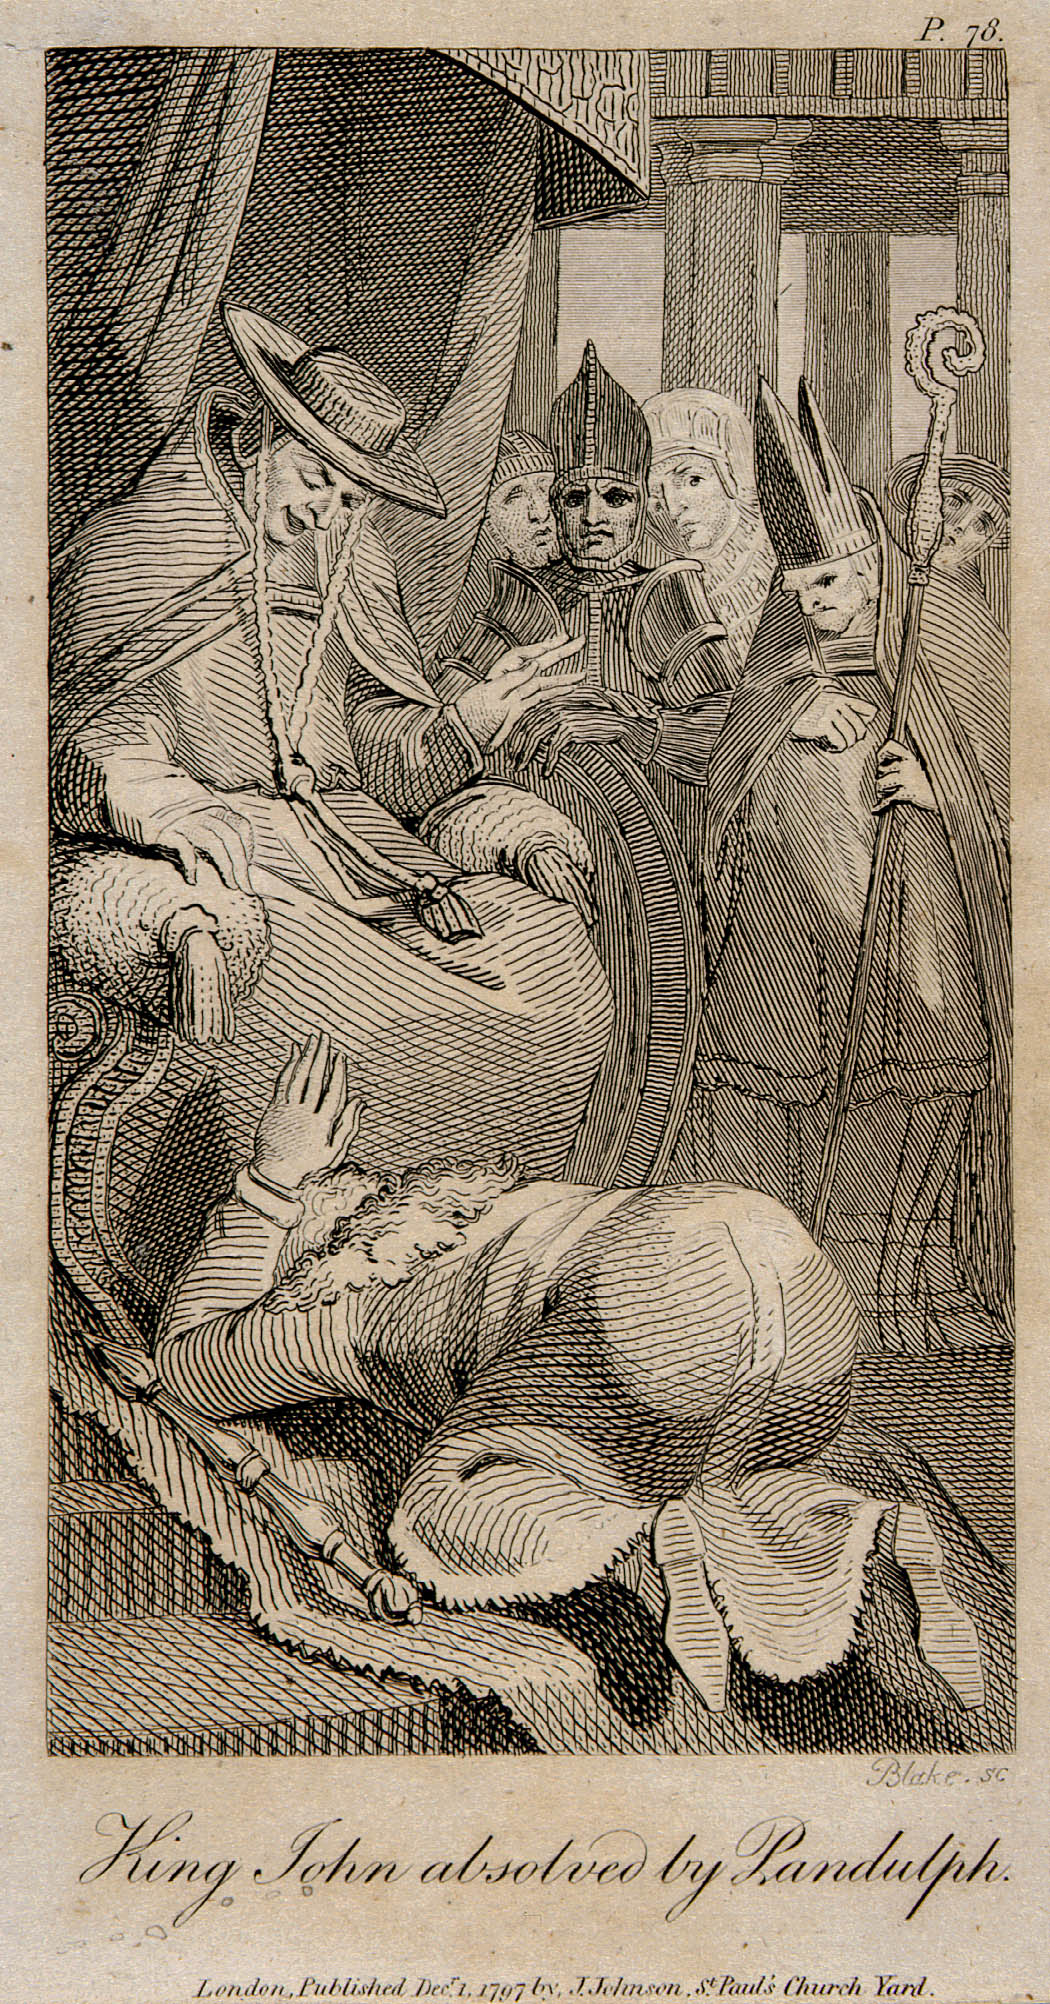 P. 78.
	
	Blake. sc
	King John absolved by Pandulph.
	London, Published Decr. 1, 1797 by J. Johnson, St. Paul’s Church Yard.